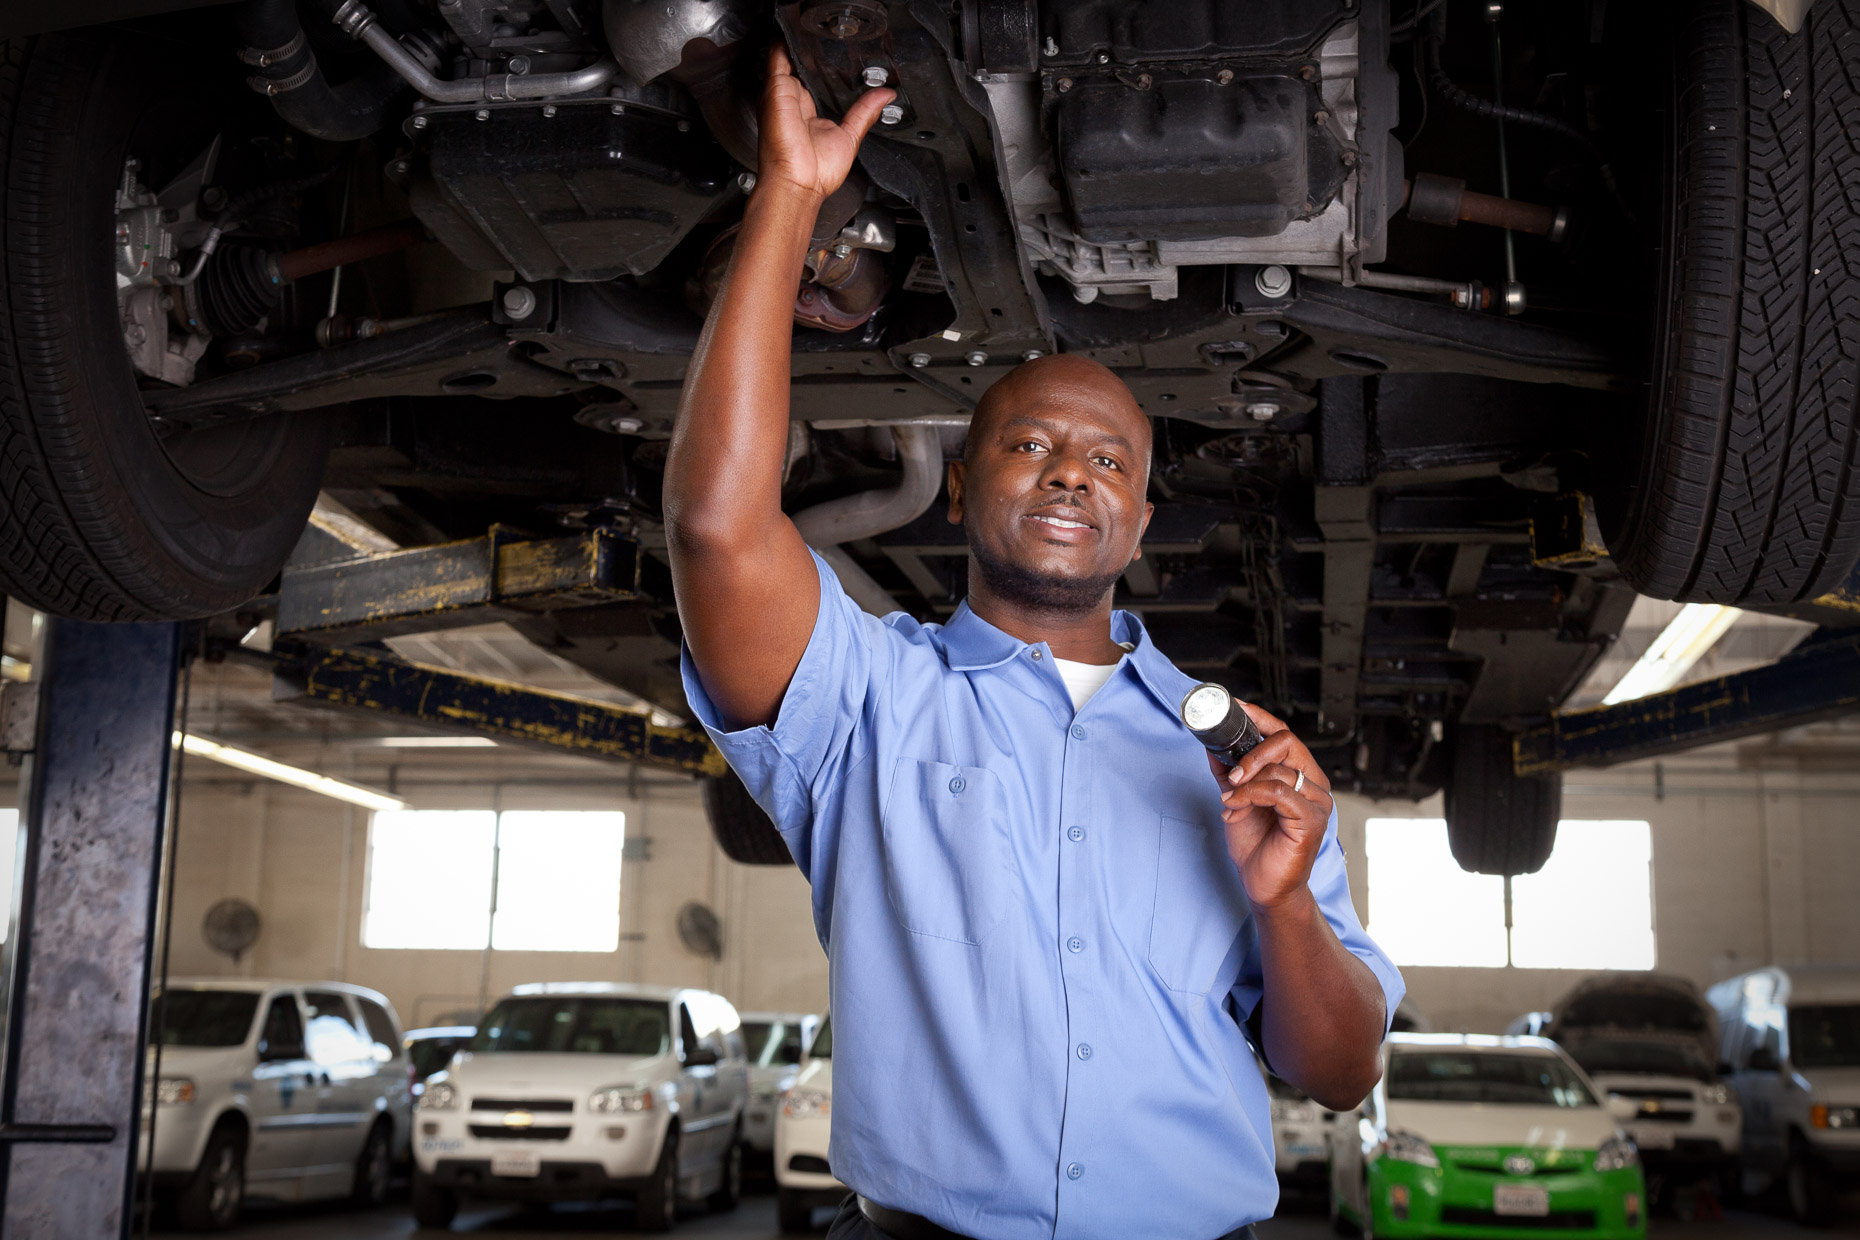 Portrait of automotive mechanic repairman inspecting underside of vehicle in repair garage by David Zaitz